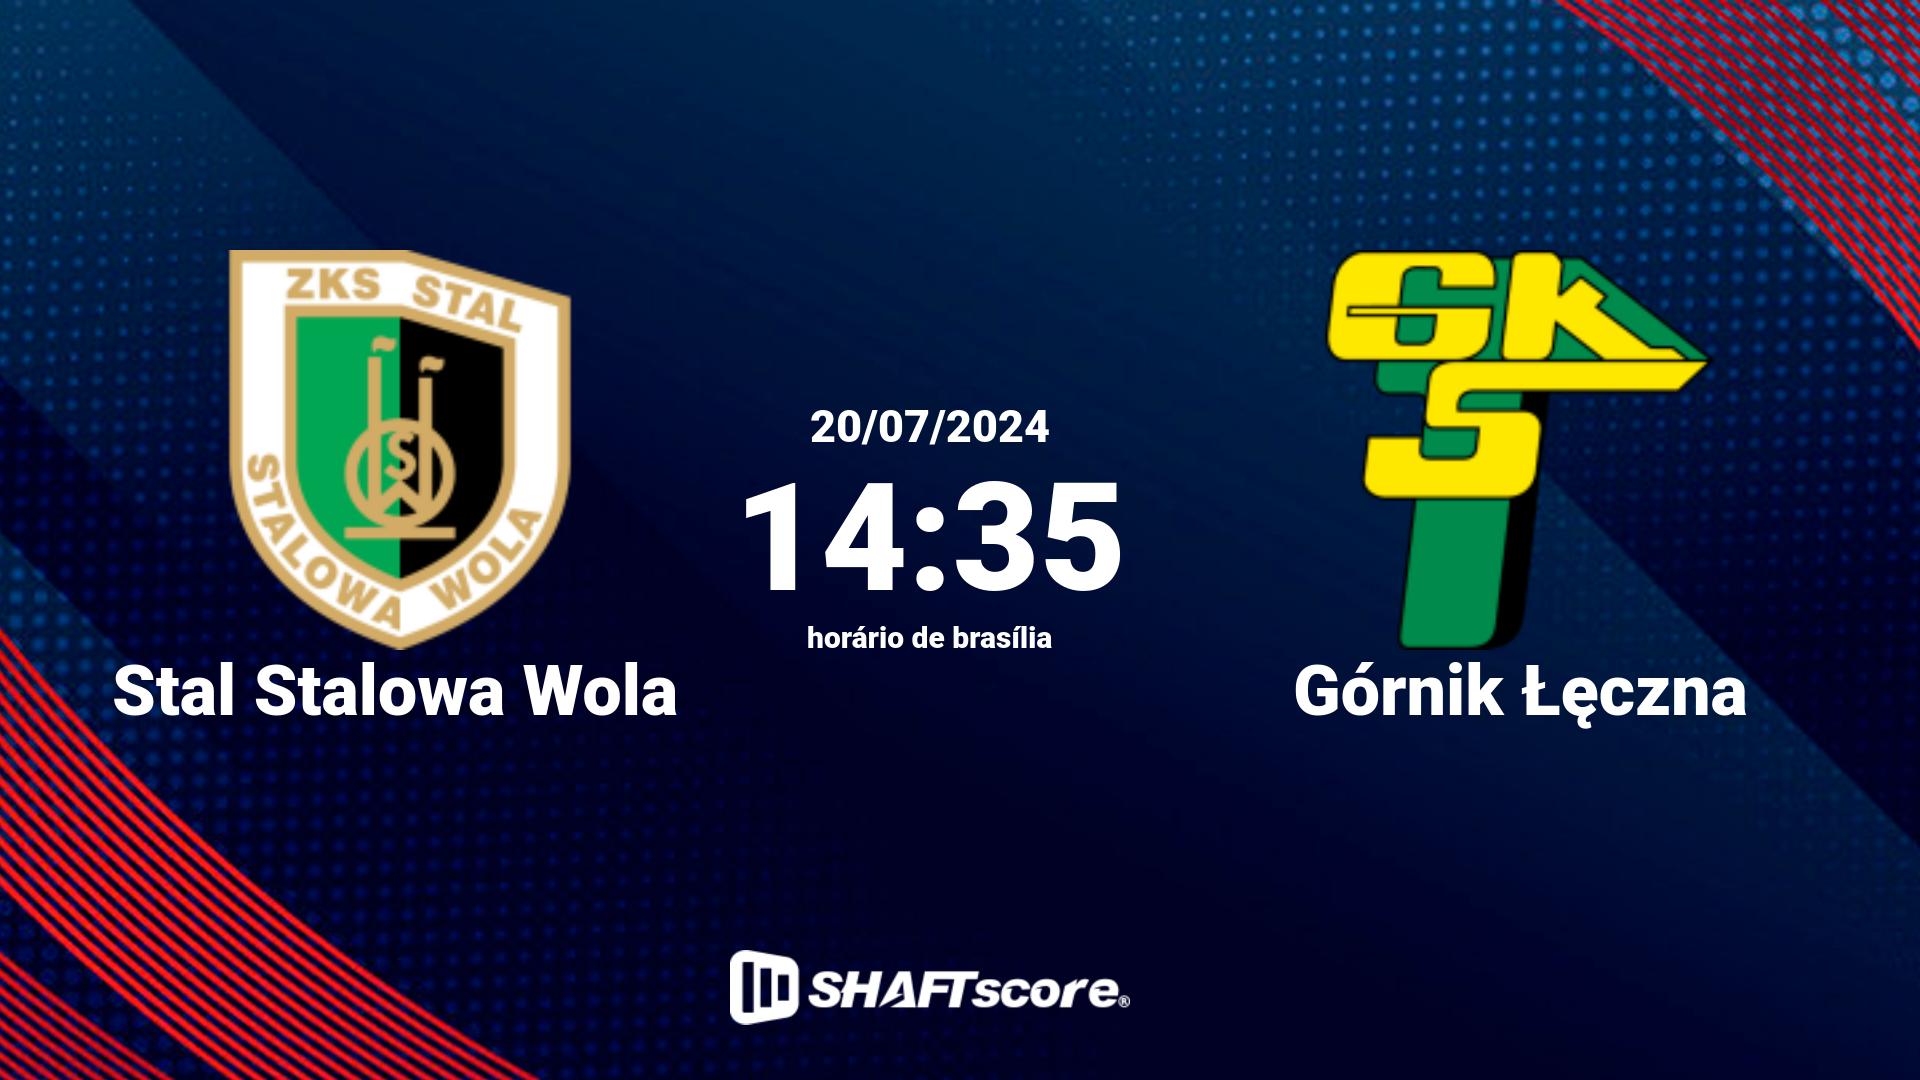 Estatísticas do jogo Stal Stalowa Wola vs Górnik Łęczna 20.07 14:35